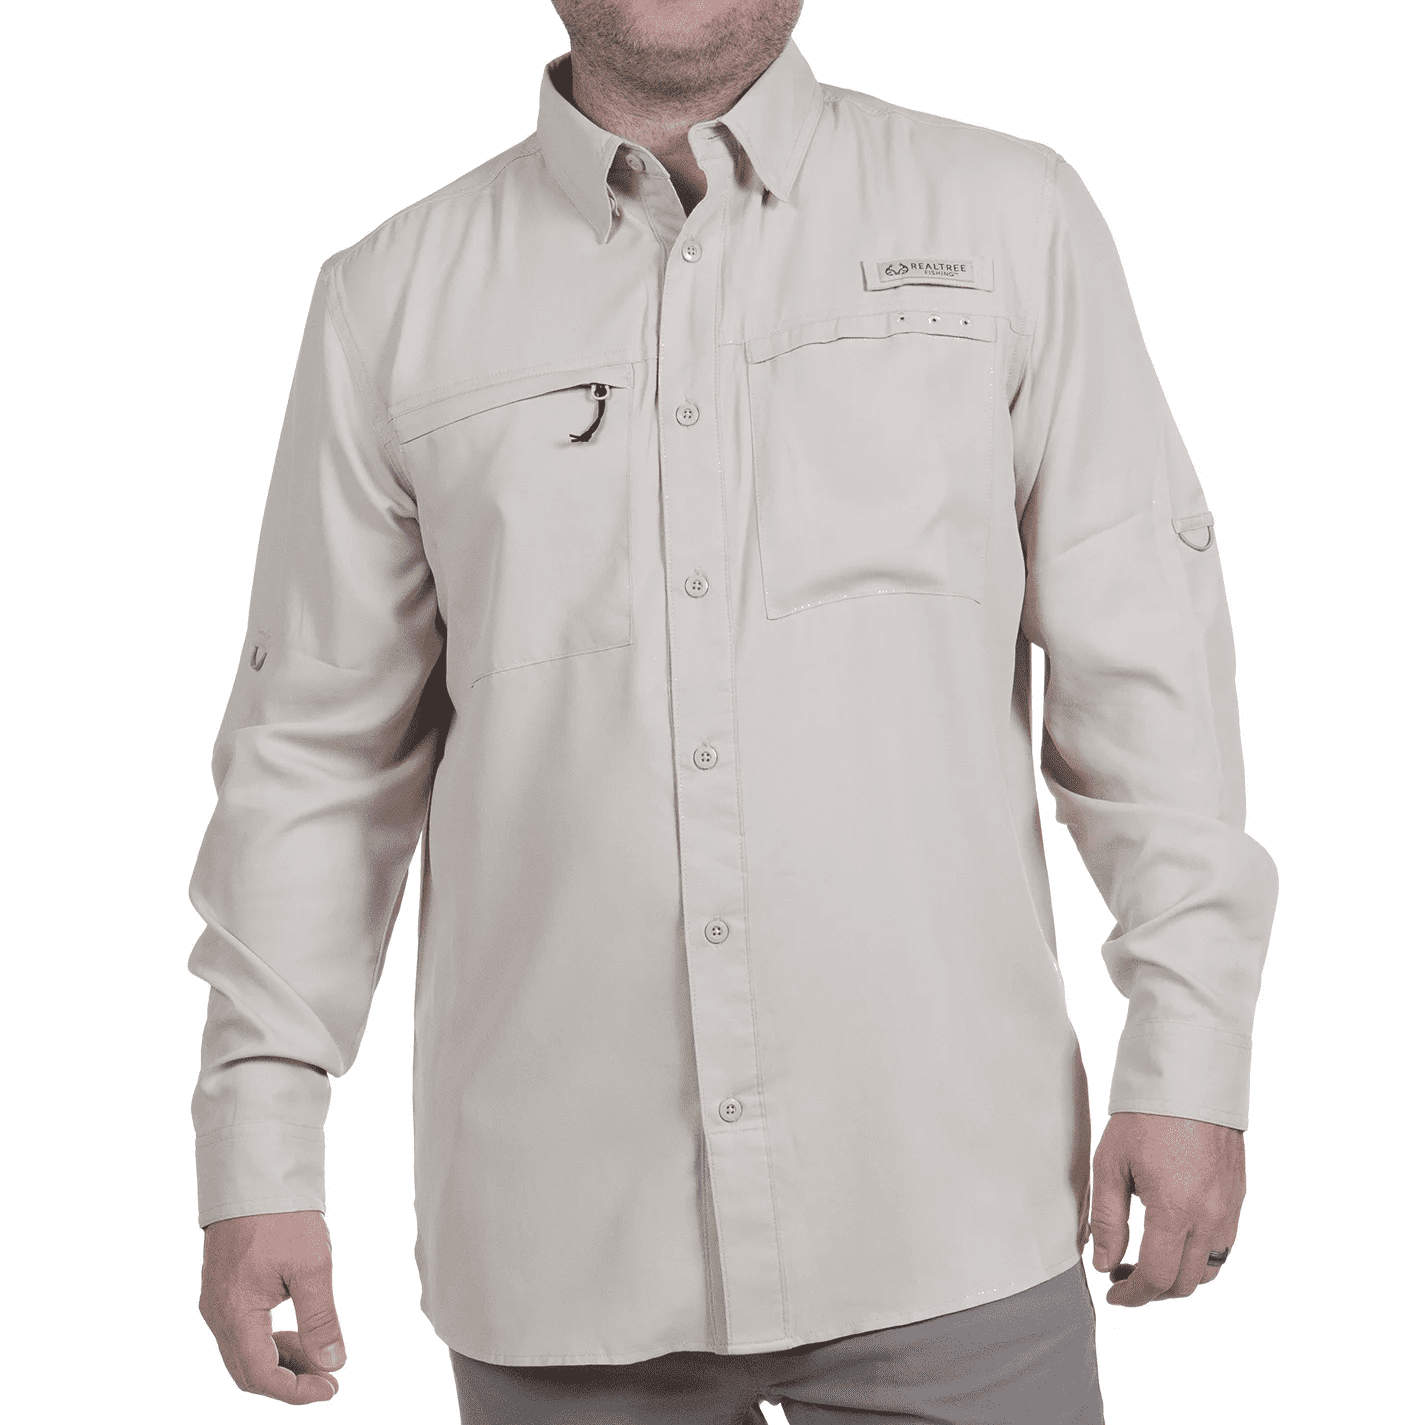 Realtree Long Sleeve Fishing Guide Shirt, Sahara, Size 2X-Large 